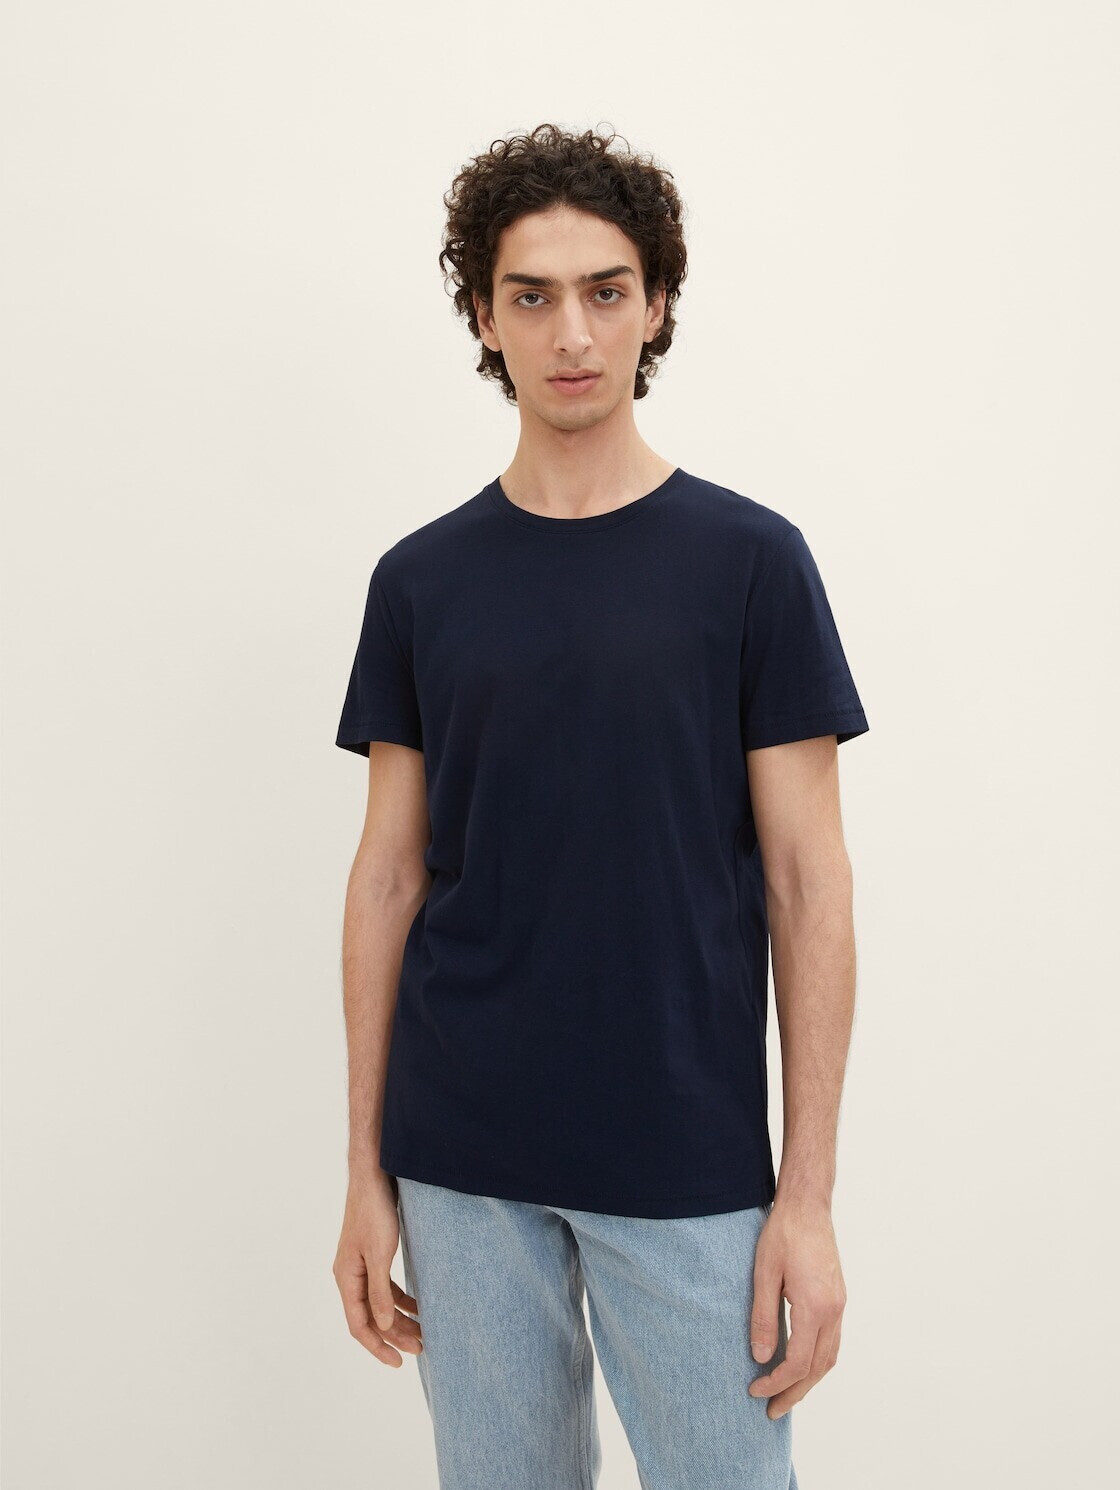 Tom Tailor Denim Basic T-Shirt im Doppelpack (1037158) sky captain blue ab  15,59 € | Preisvergleich bei | T-Shirts